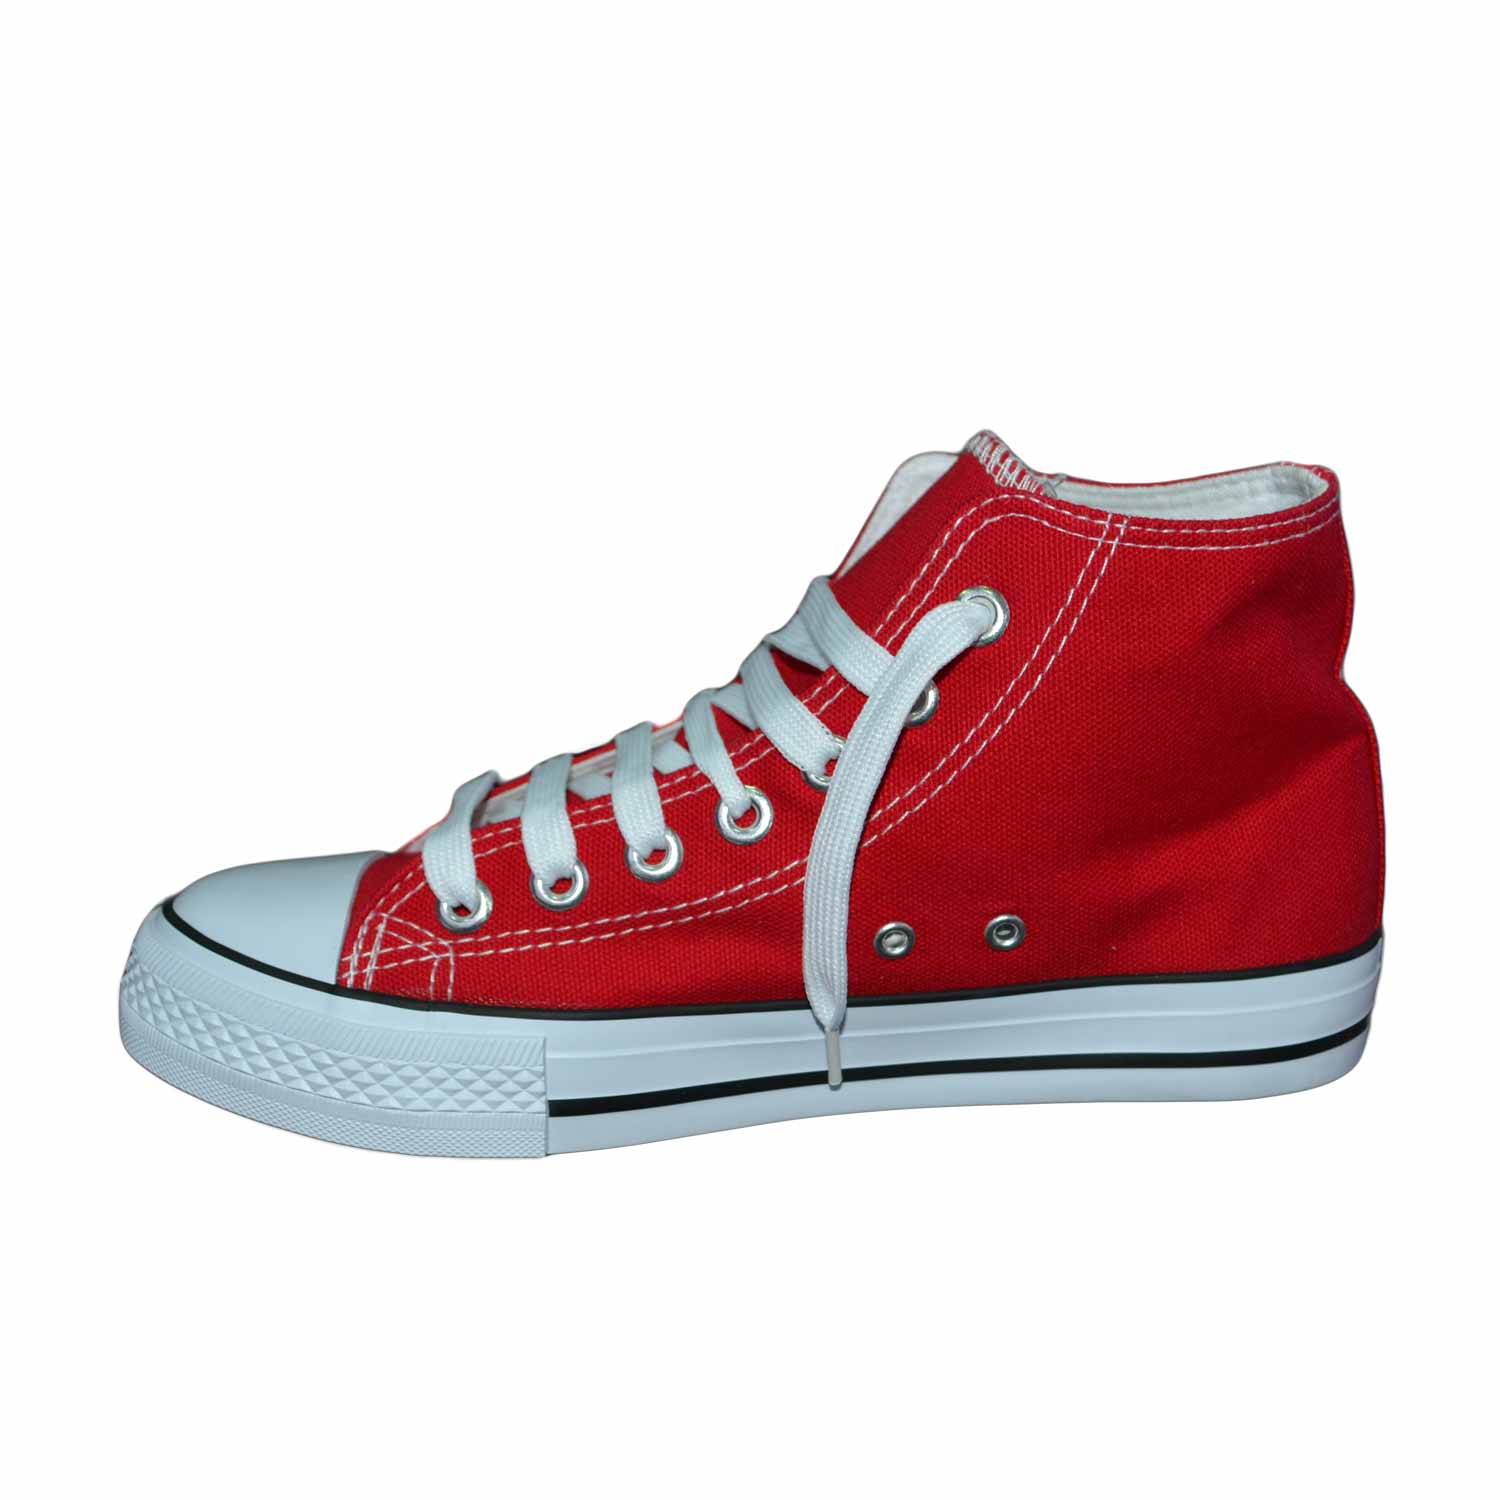 Scarpe tela uomo alte ginnico ultraleggere comode rosse stringate lacci  punta bianca uomo sneakers alta Malu Shoes | MaluShoes